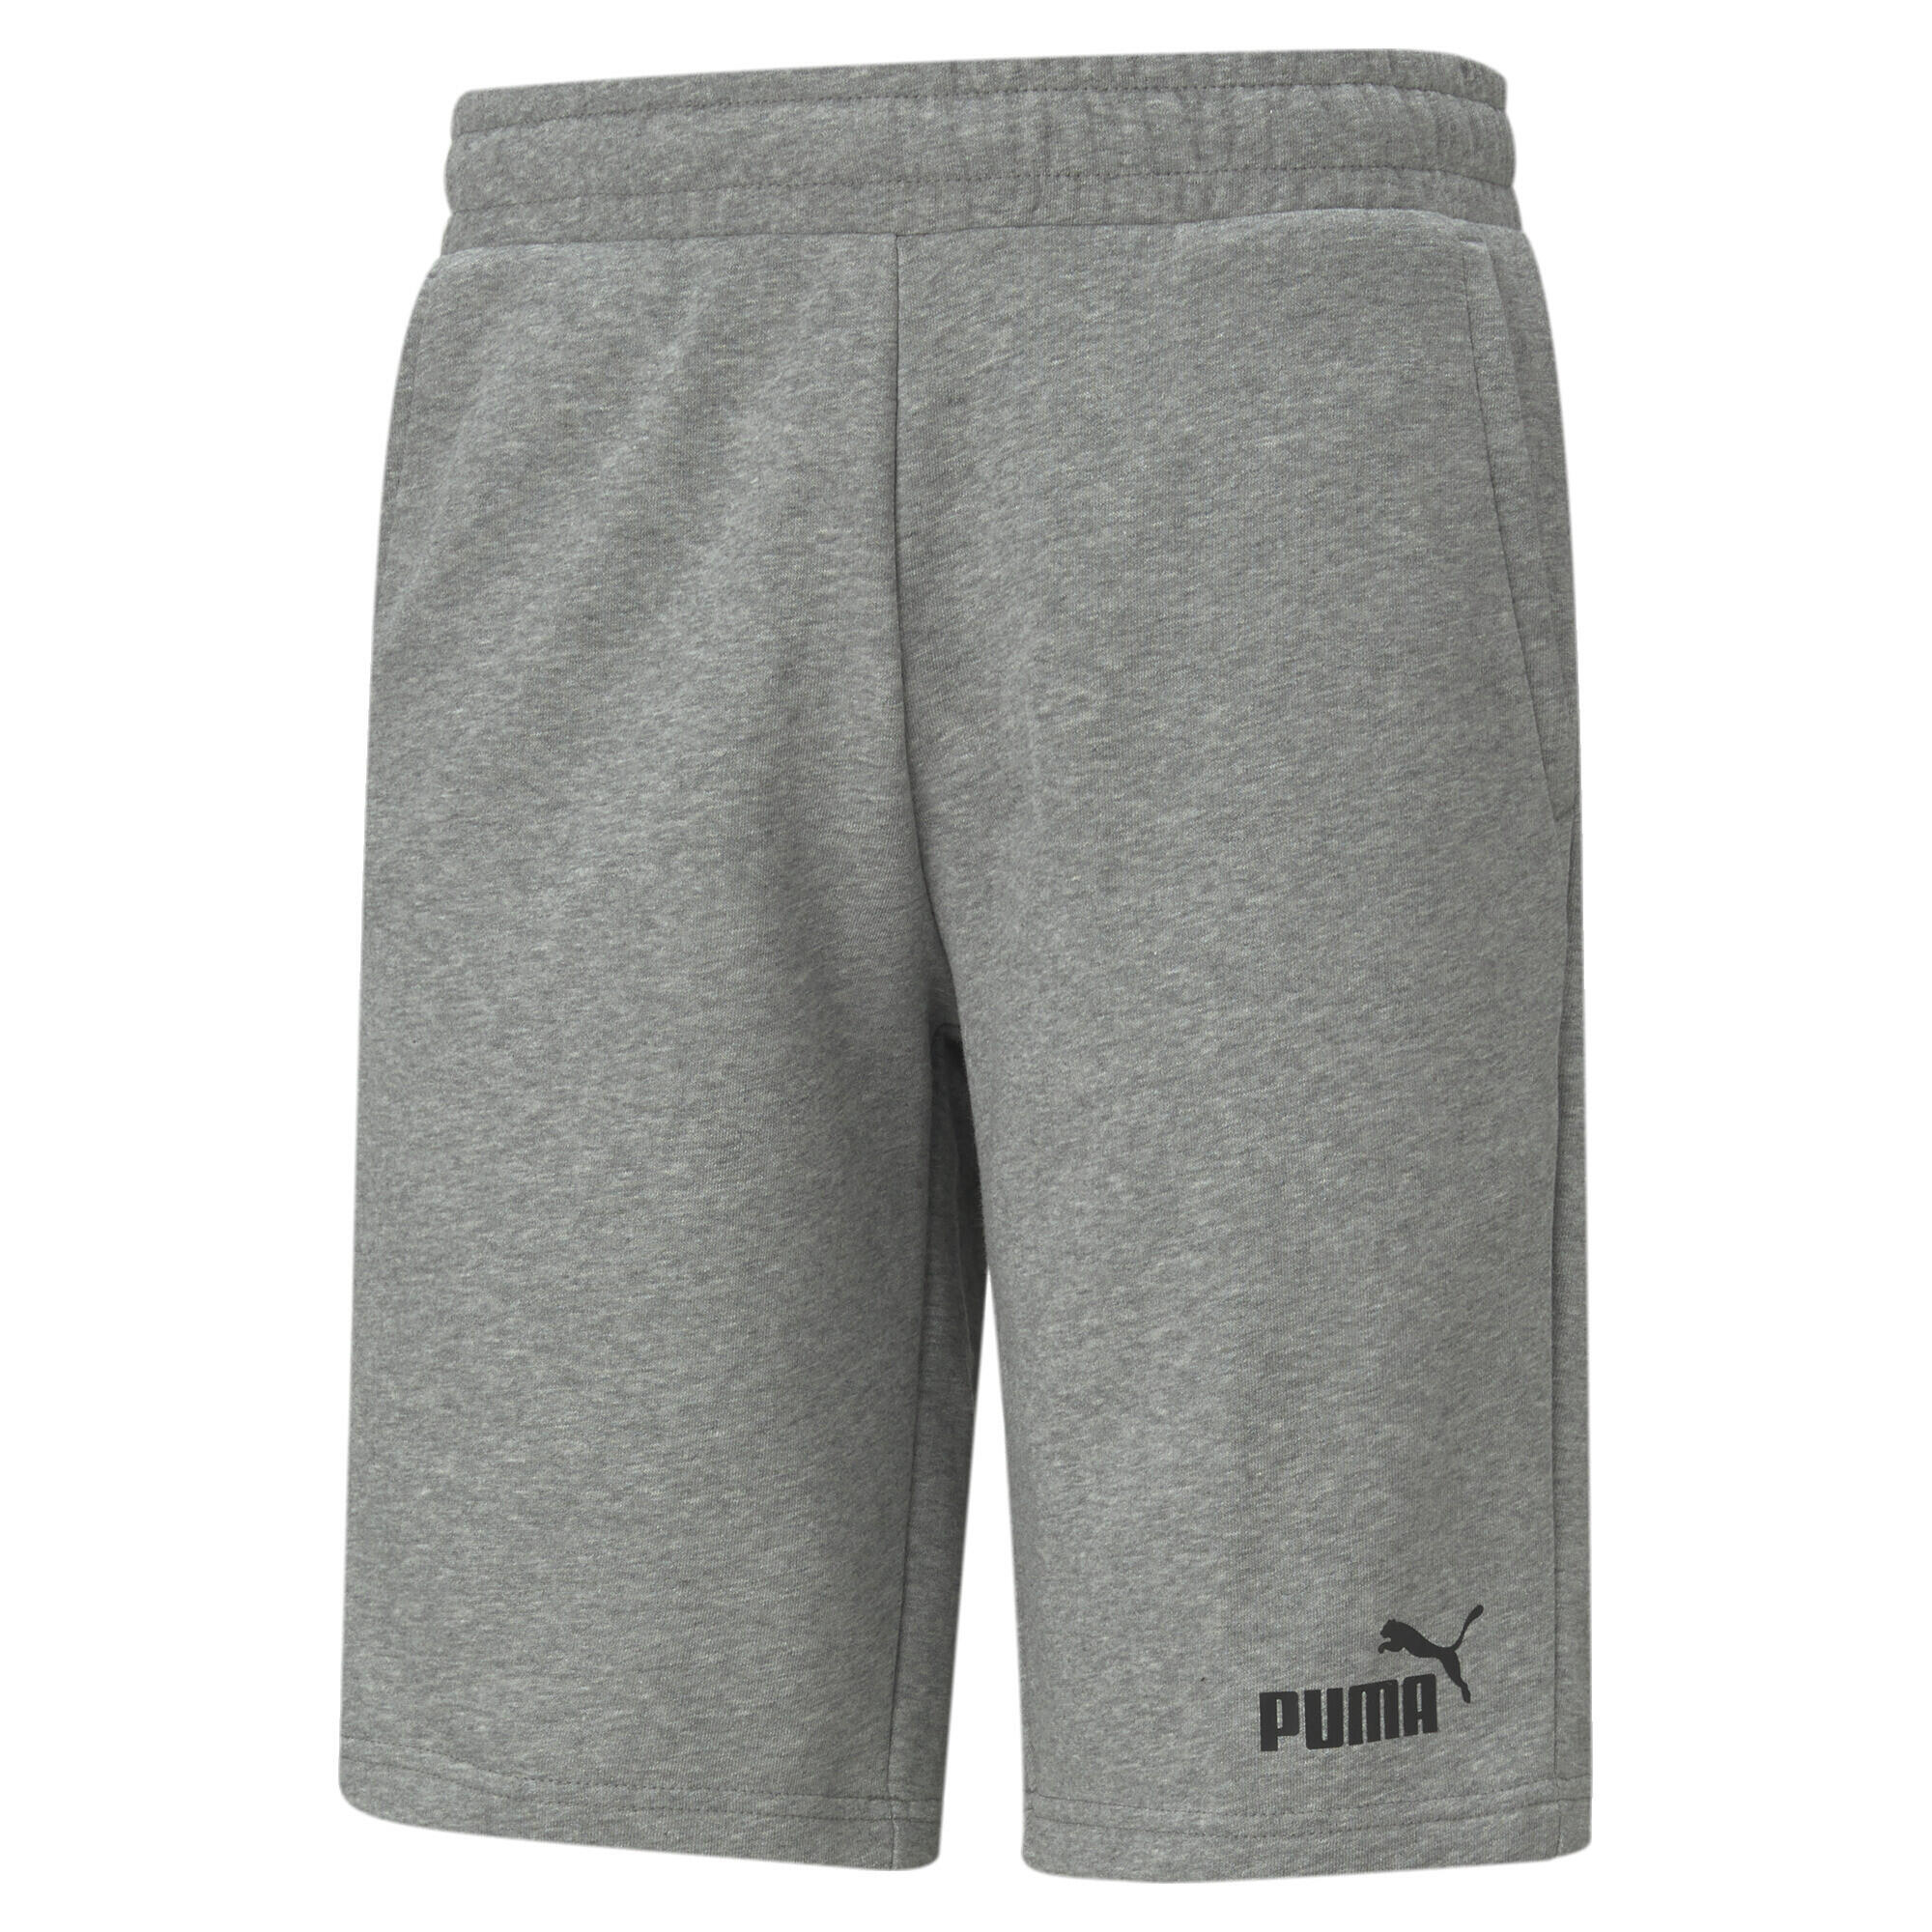 PUMA PUMA Mens Essentials Shorts - Medium Gray Heather